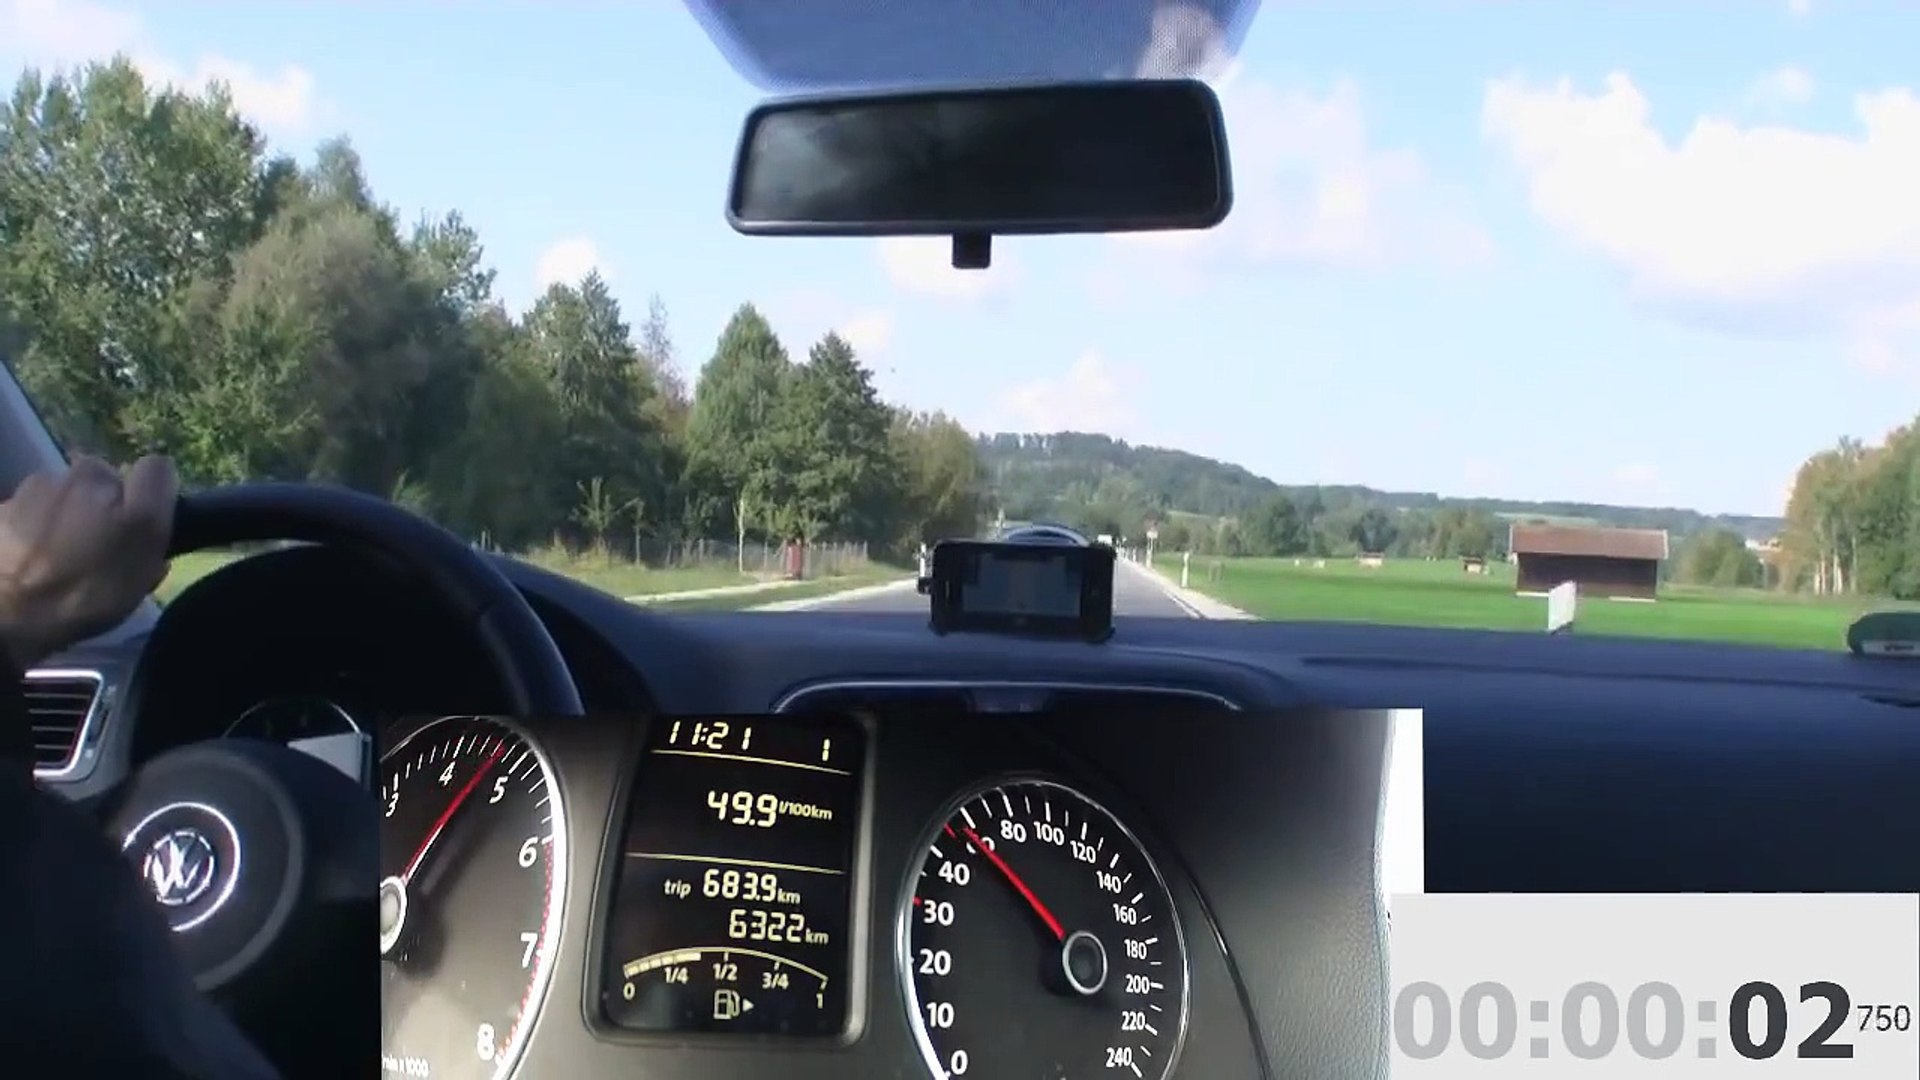 VW Polo 1.2 TSI 0-100 km/h Handschalter (0-60 mph - manual - Stick shift) -  video dailymotion